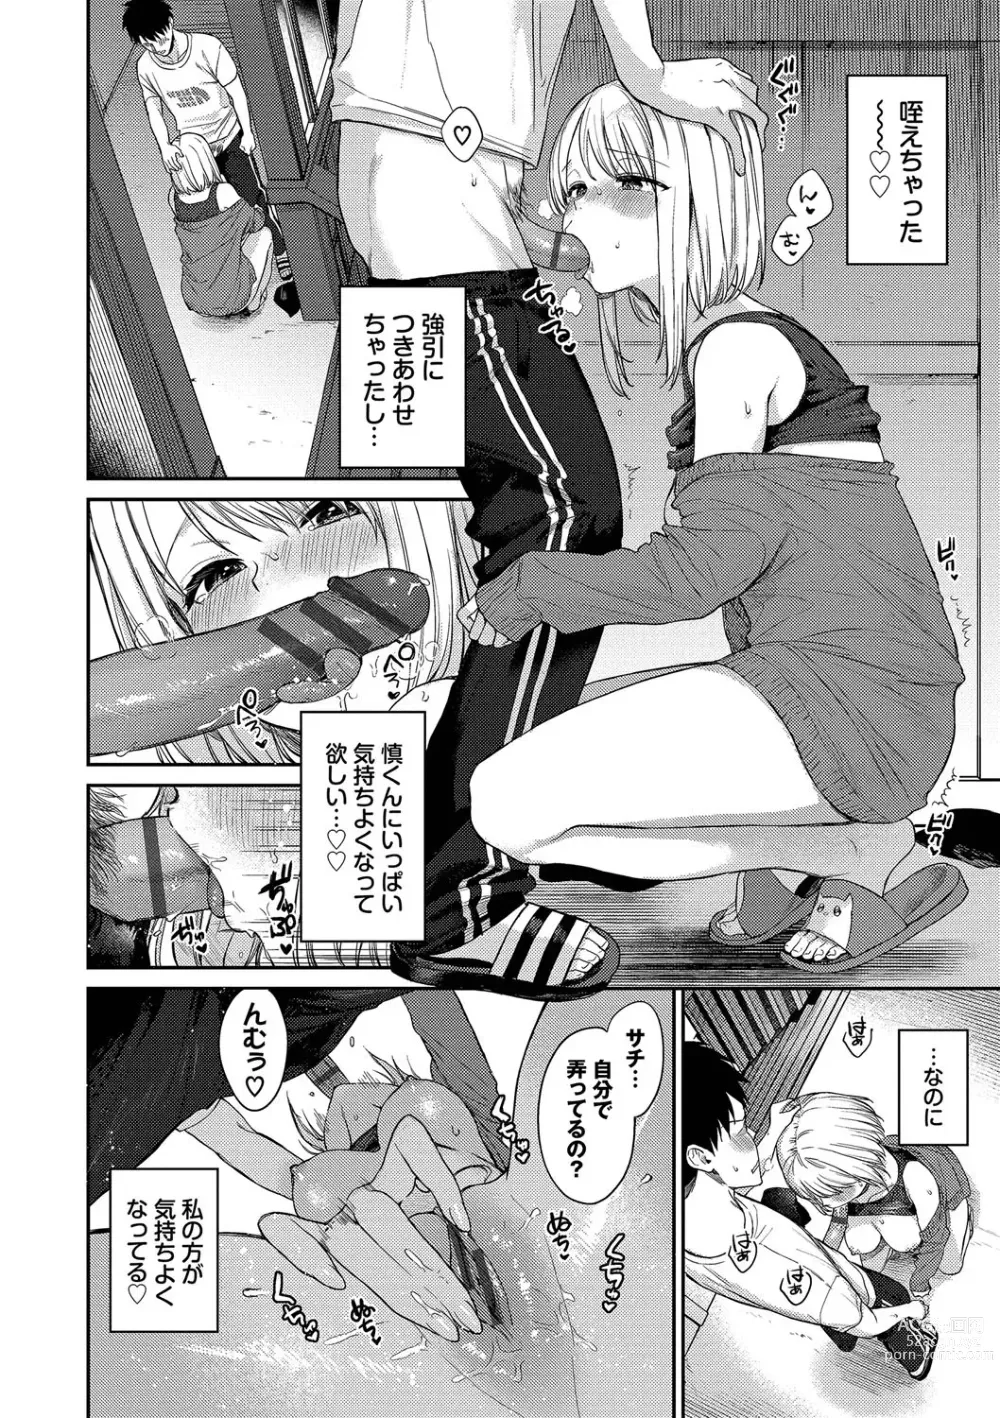 Page 189 of manga Mutsuri Bloom